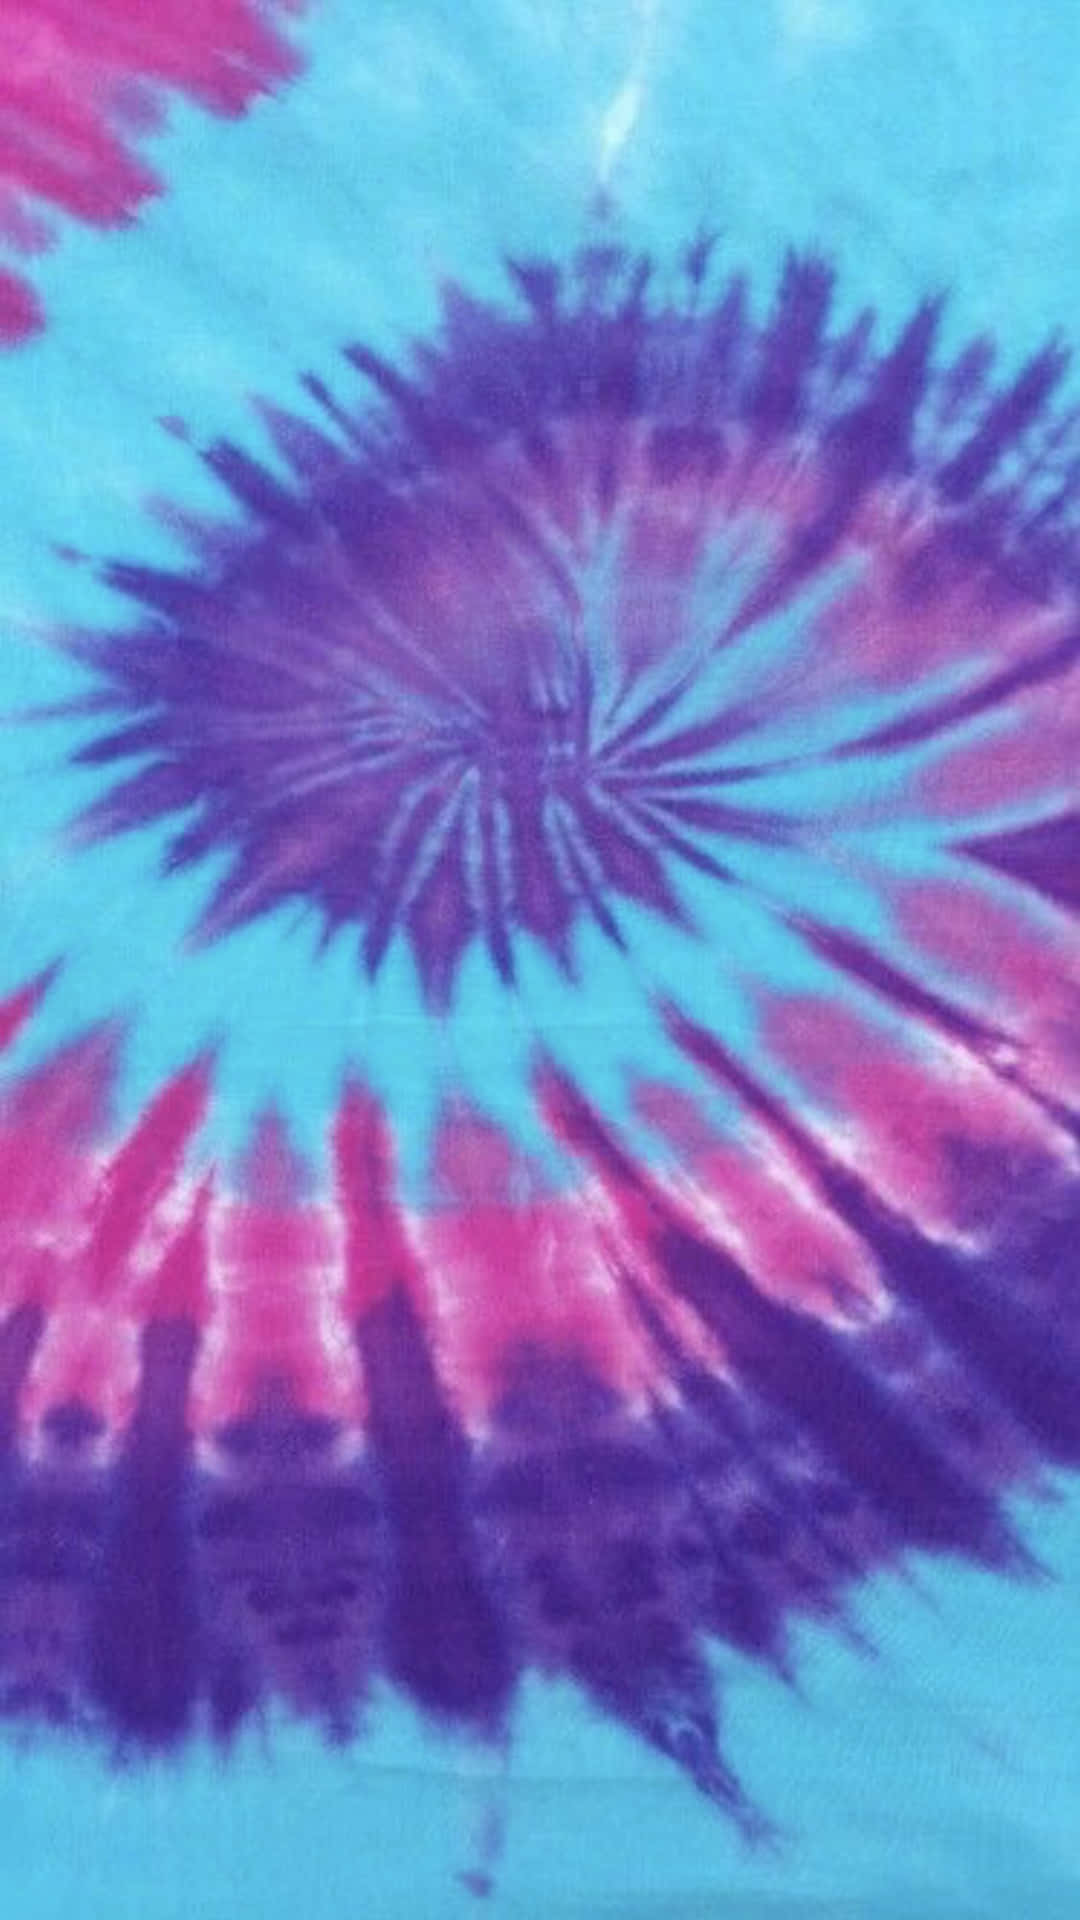 Bonitofondo De Pantalla De Estilo Hippie, Con Estampado De Empate Teñido En Tonos Azul Claro Y Rosa. Fondo de pantalla